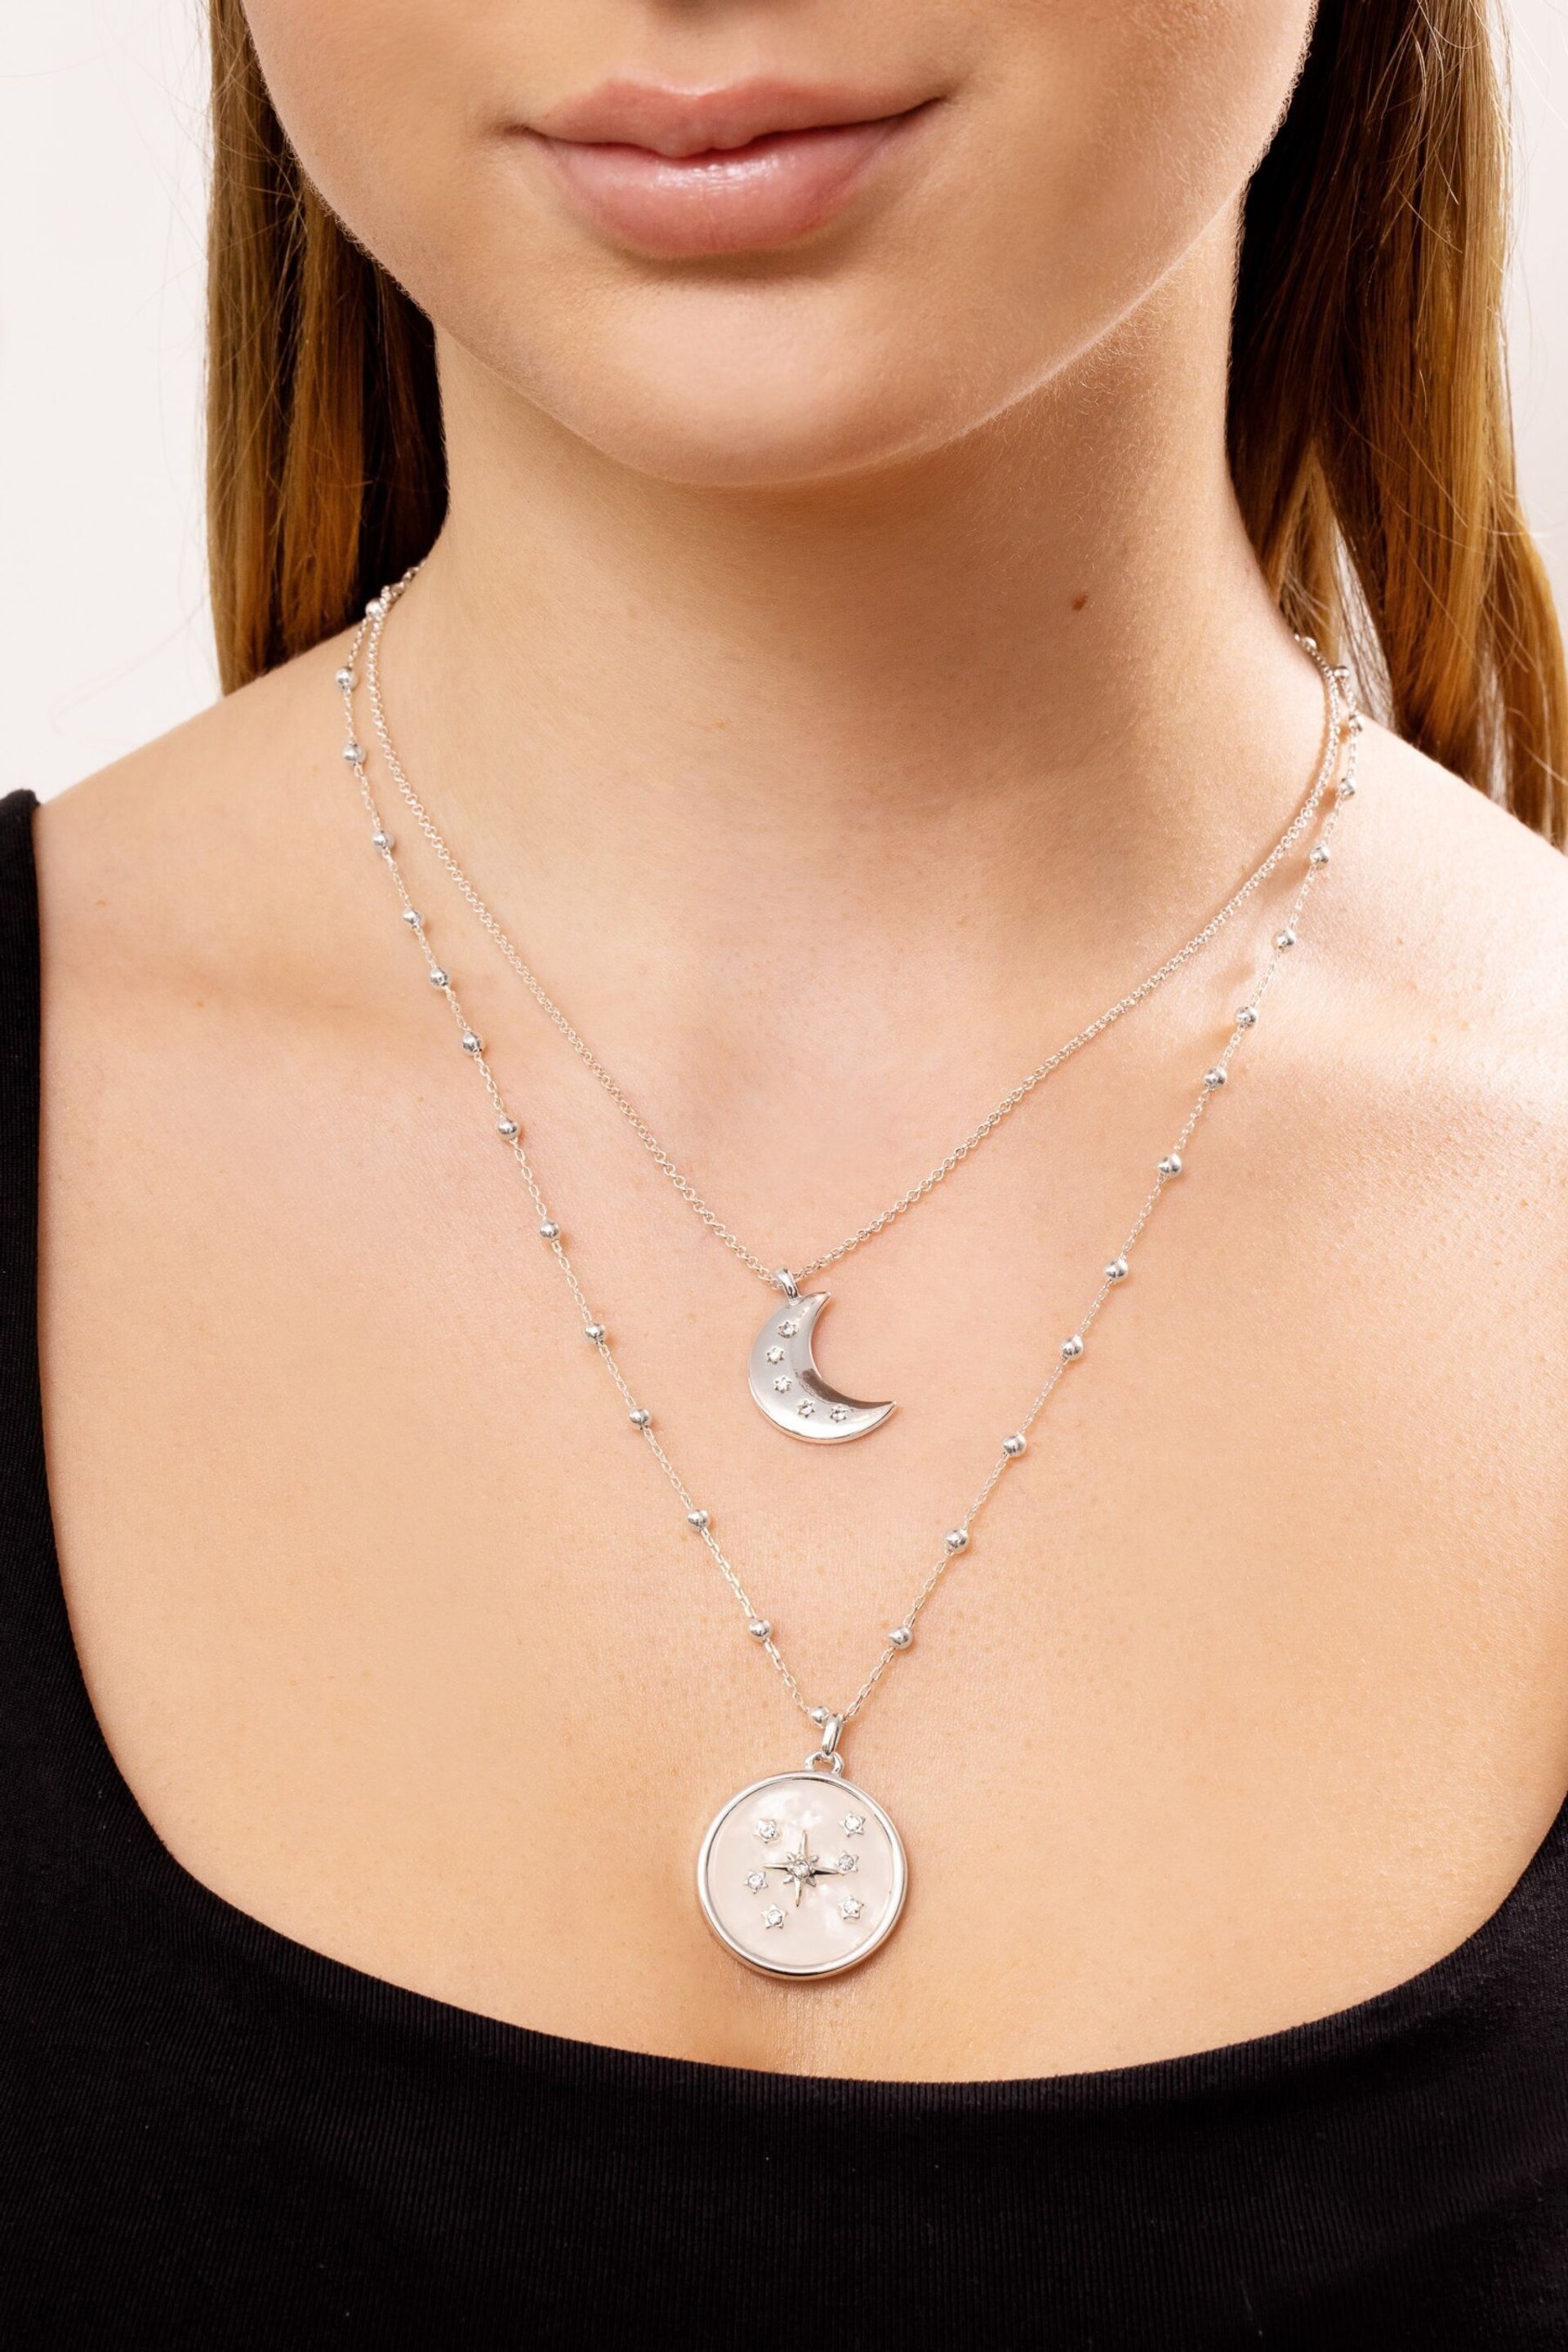 Caramel Jewellery London Silver Tone Constellation White Quartz Layered Necklace - Image 5 of 6